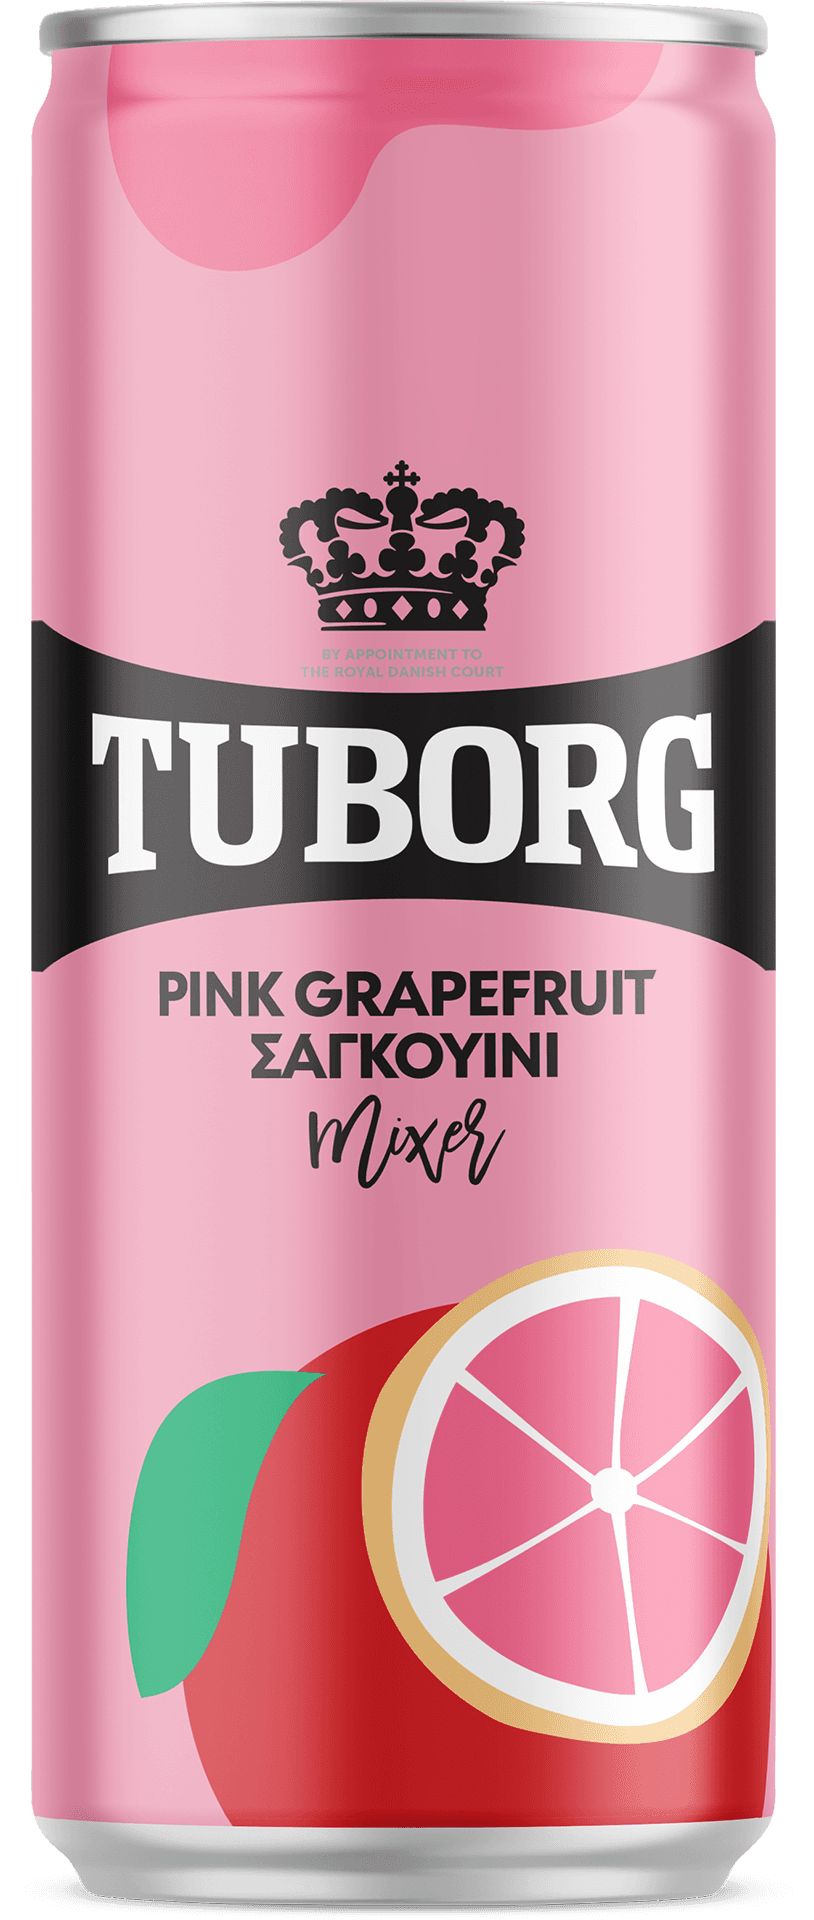 Tuborg Pink Grapefruit Σαγκουινι